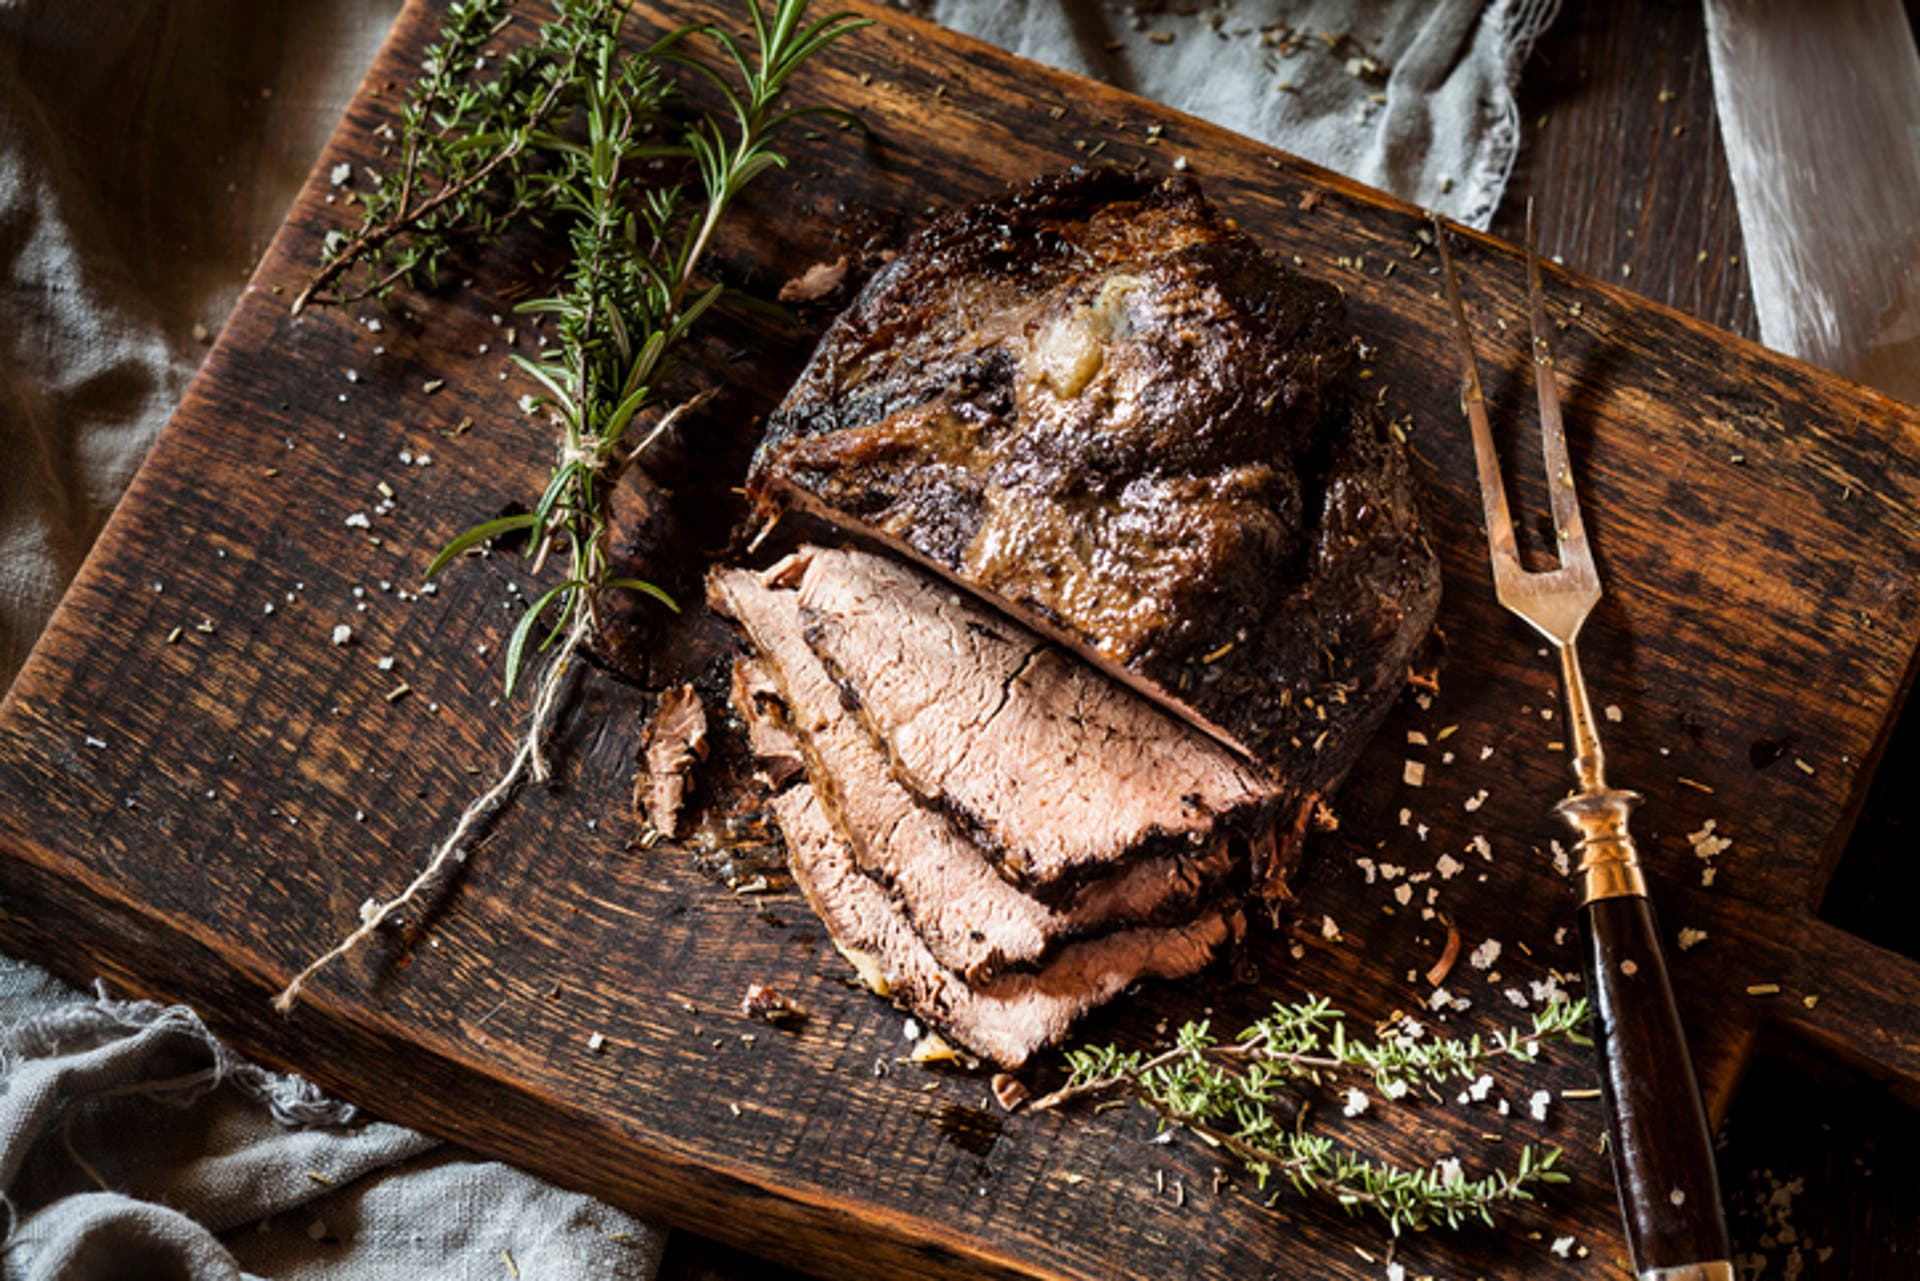  Sliced roast beef, rosemary, thyme and sea salt on chopping board 